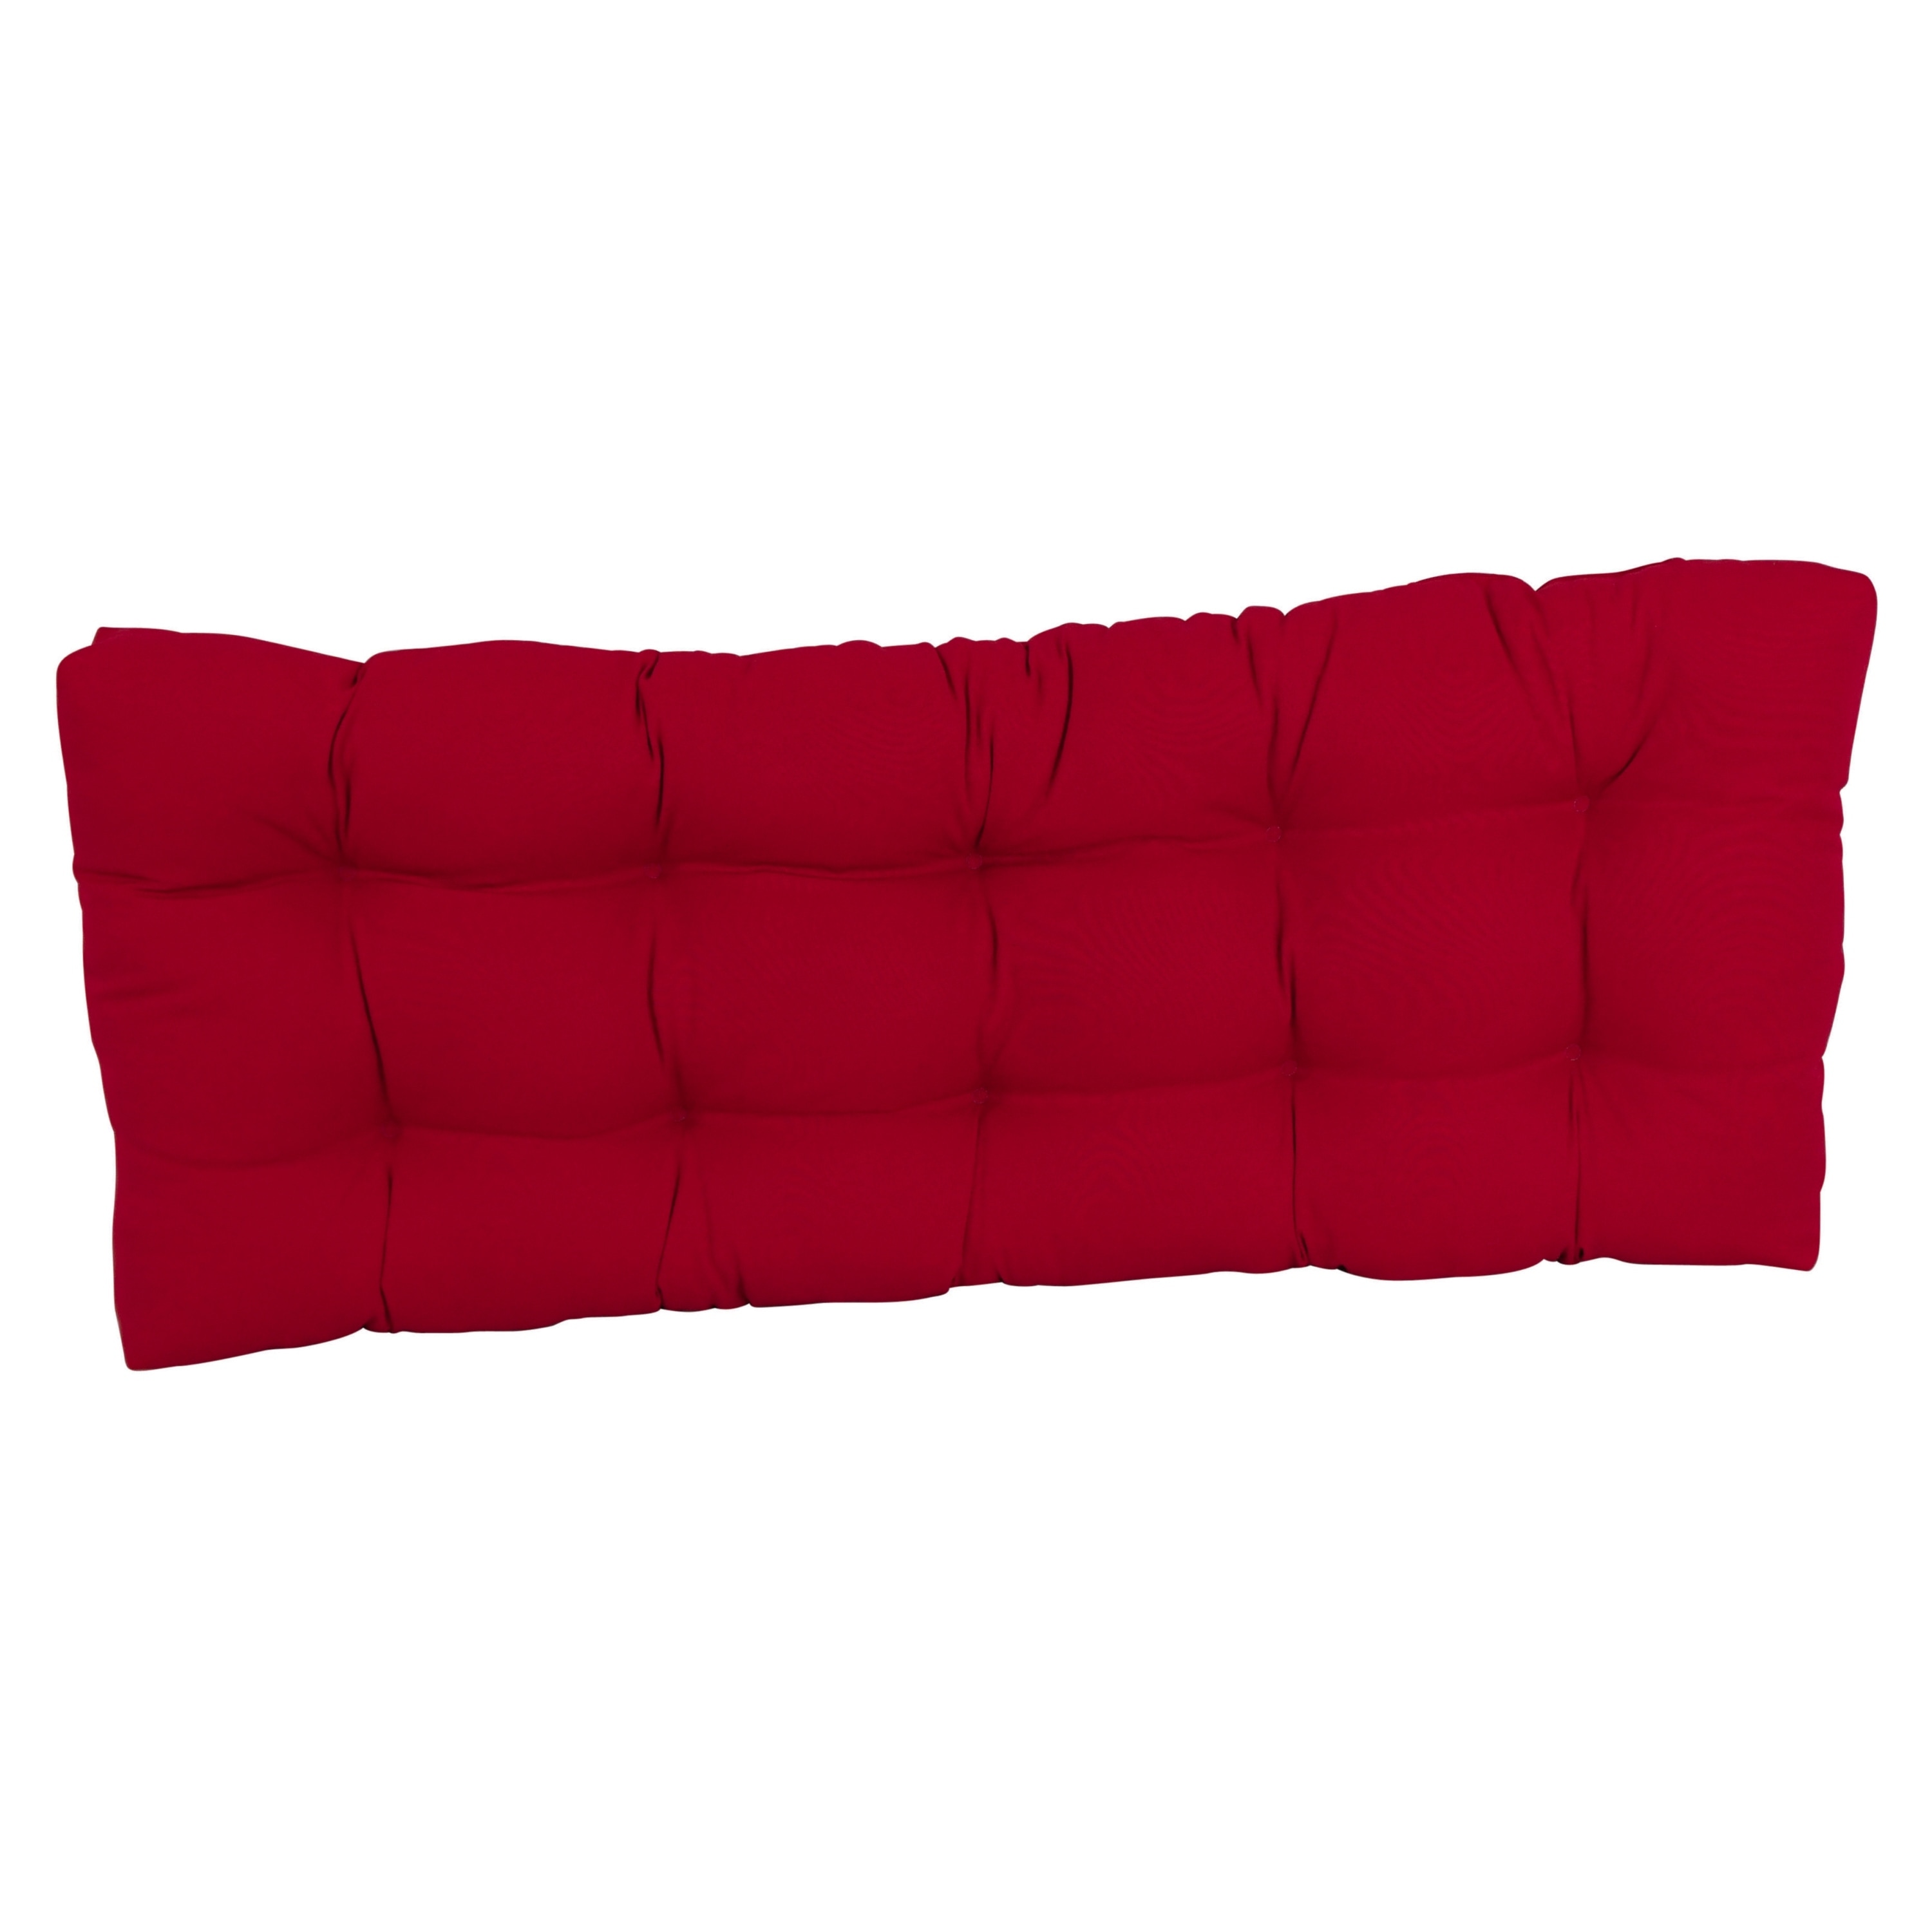 Saybrook Tufted Cushion Recliner - Bed Bath & Beyond - 32248426